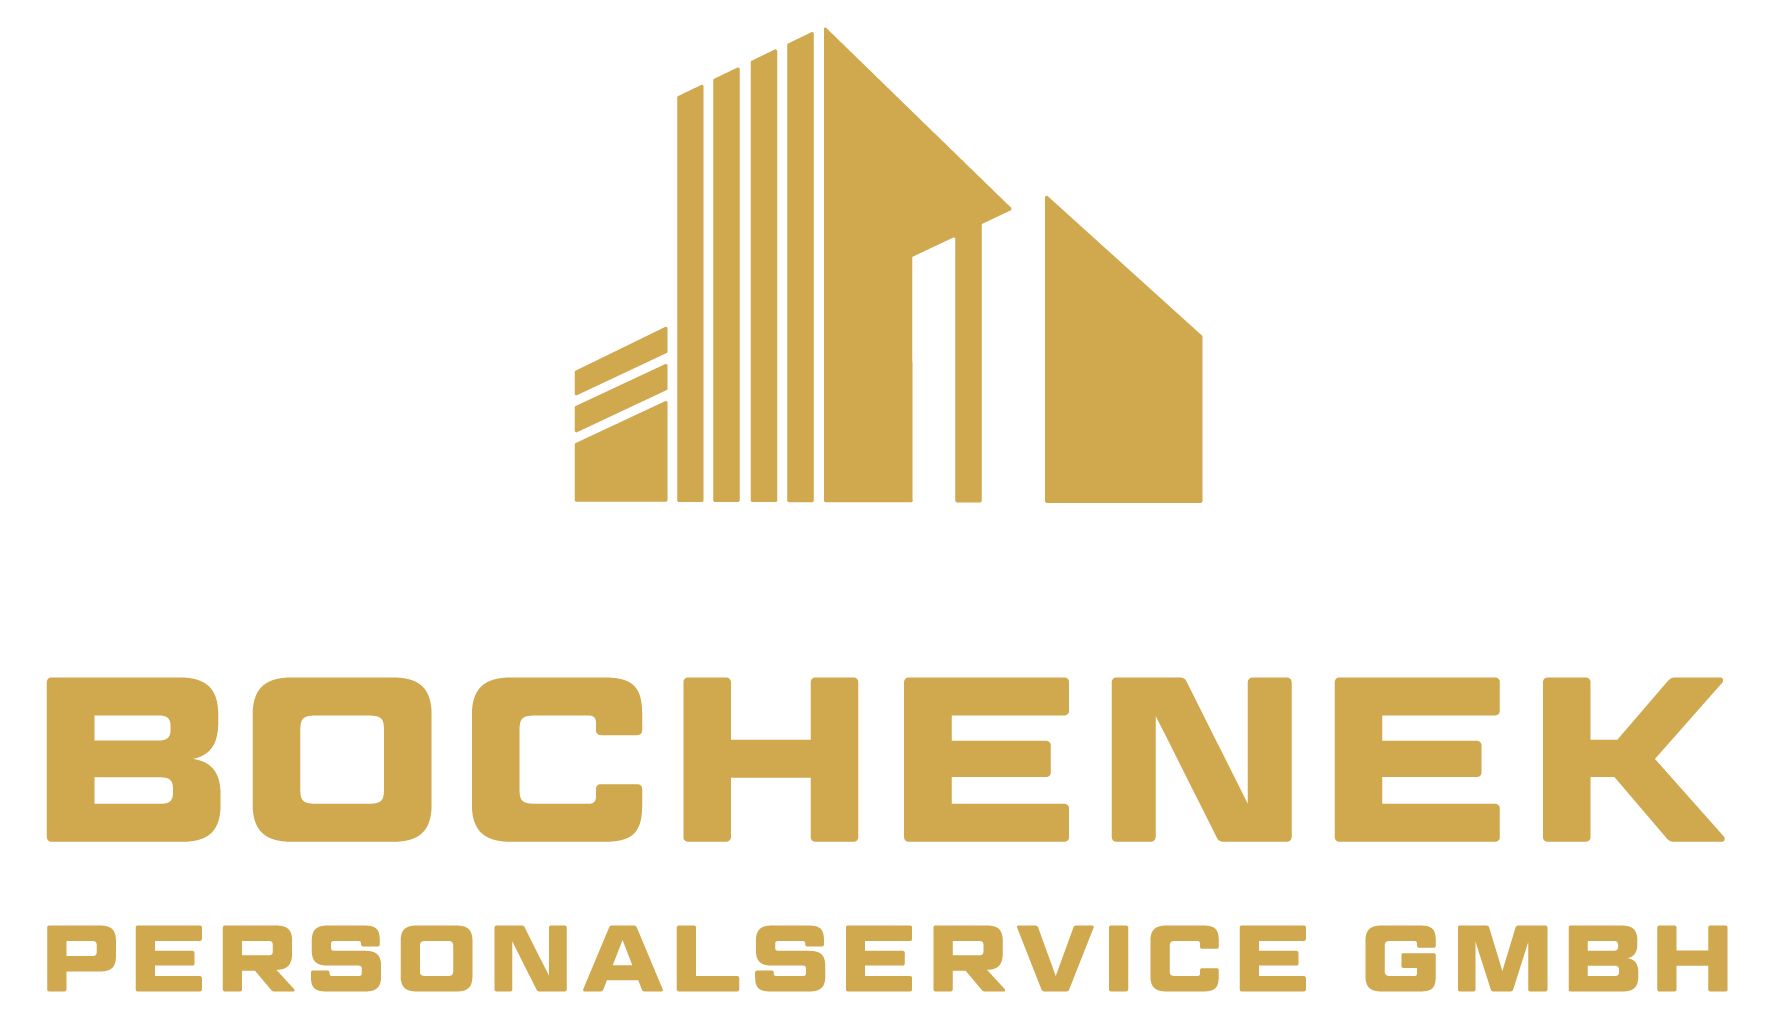 Bochenek Personalsevice GmbH logo